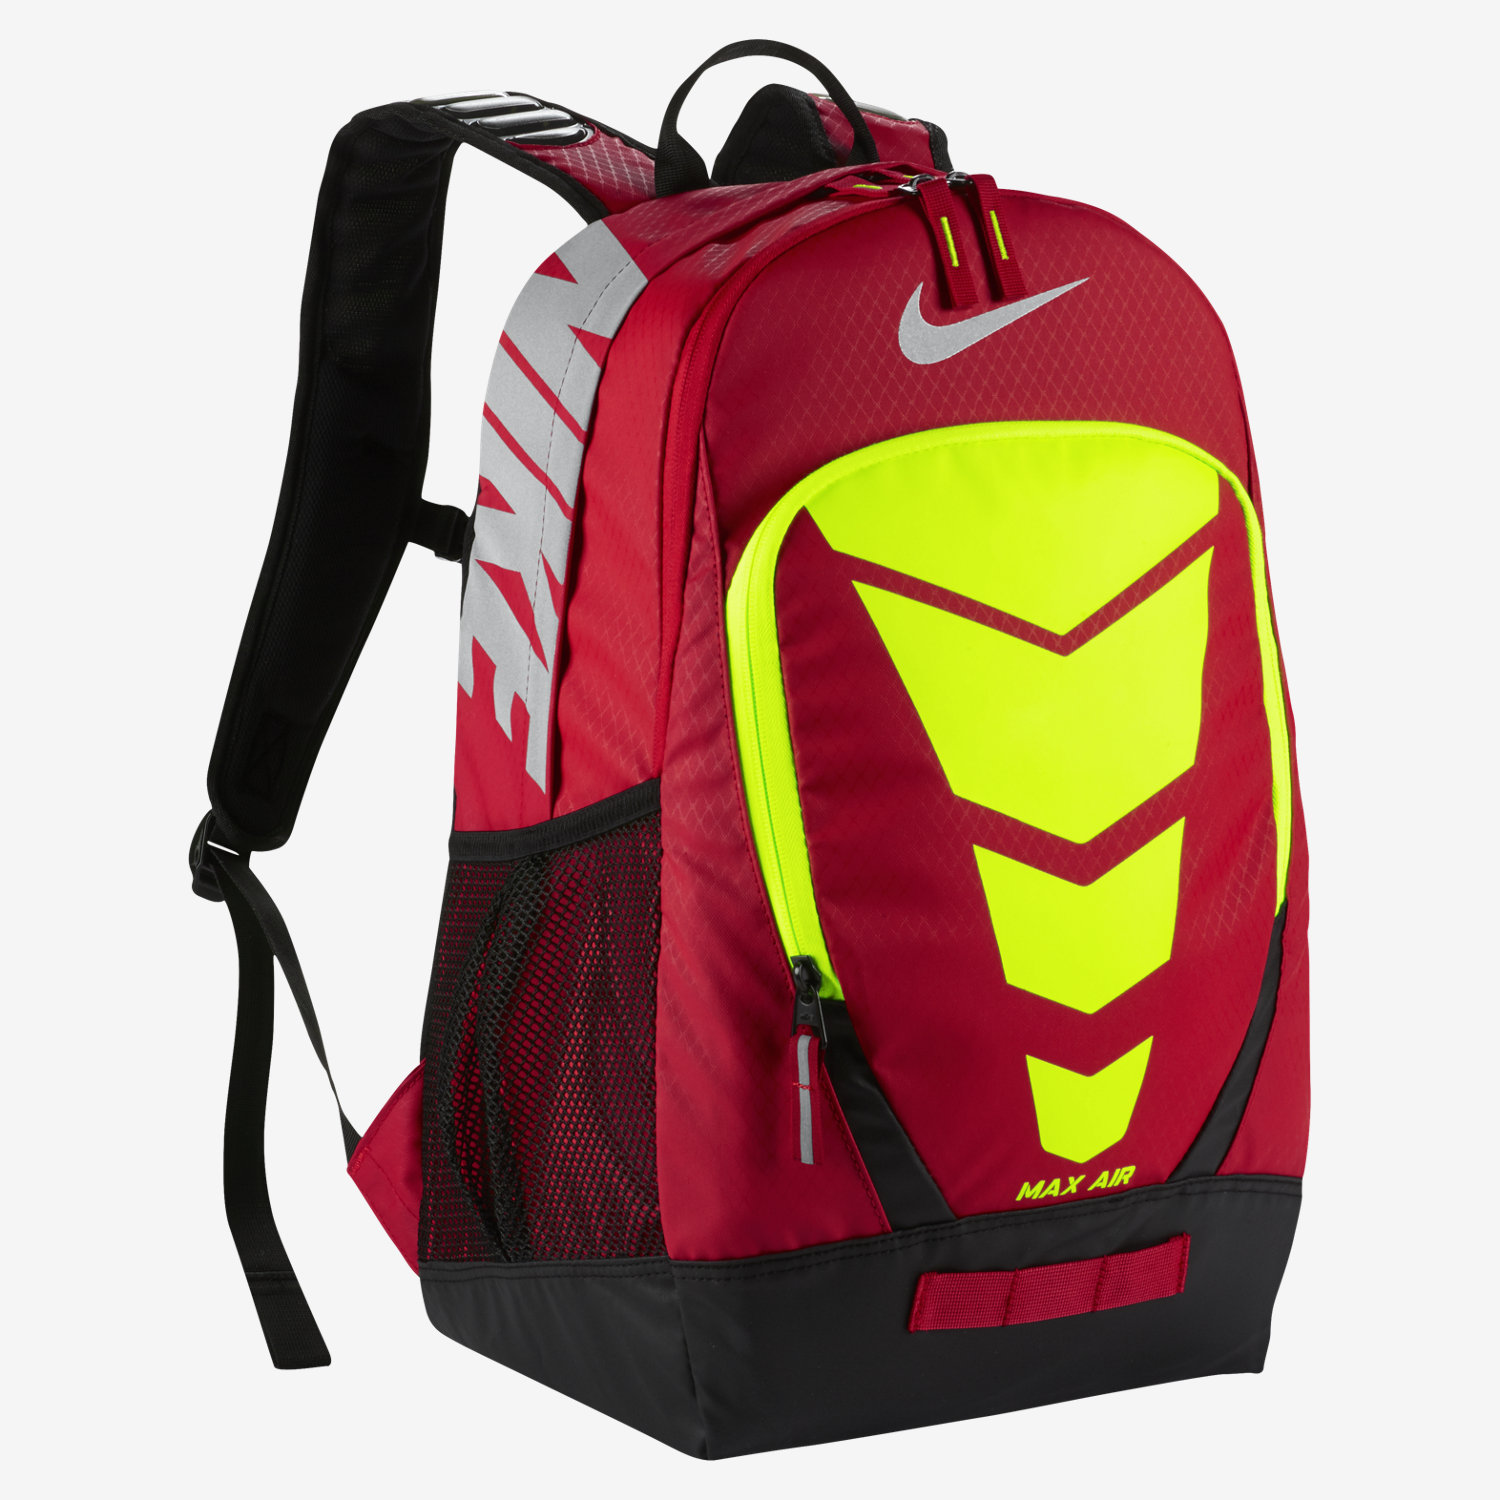 Nike Air Backpack Red And Black | semashow.com